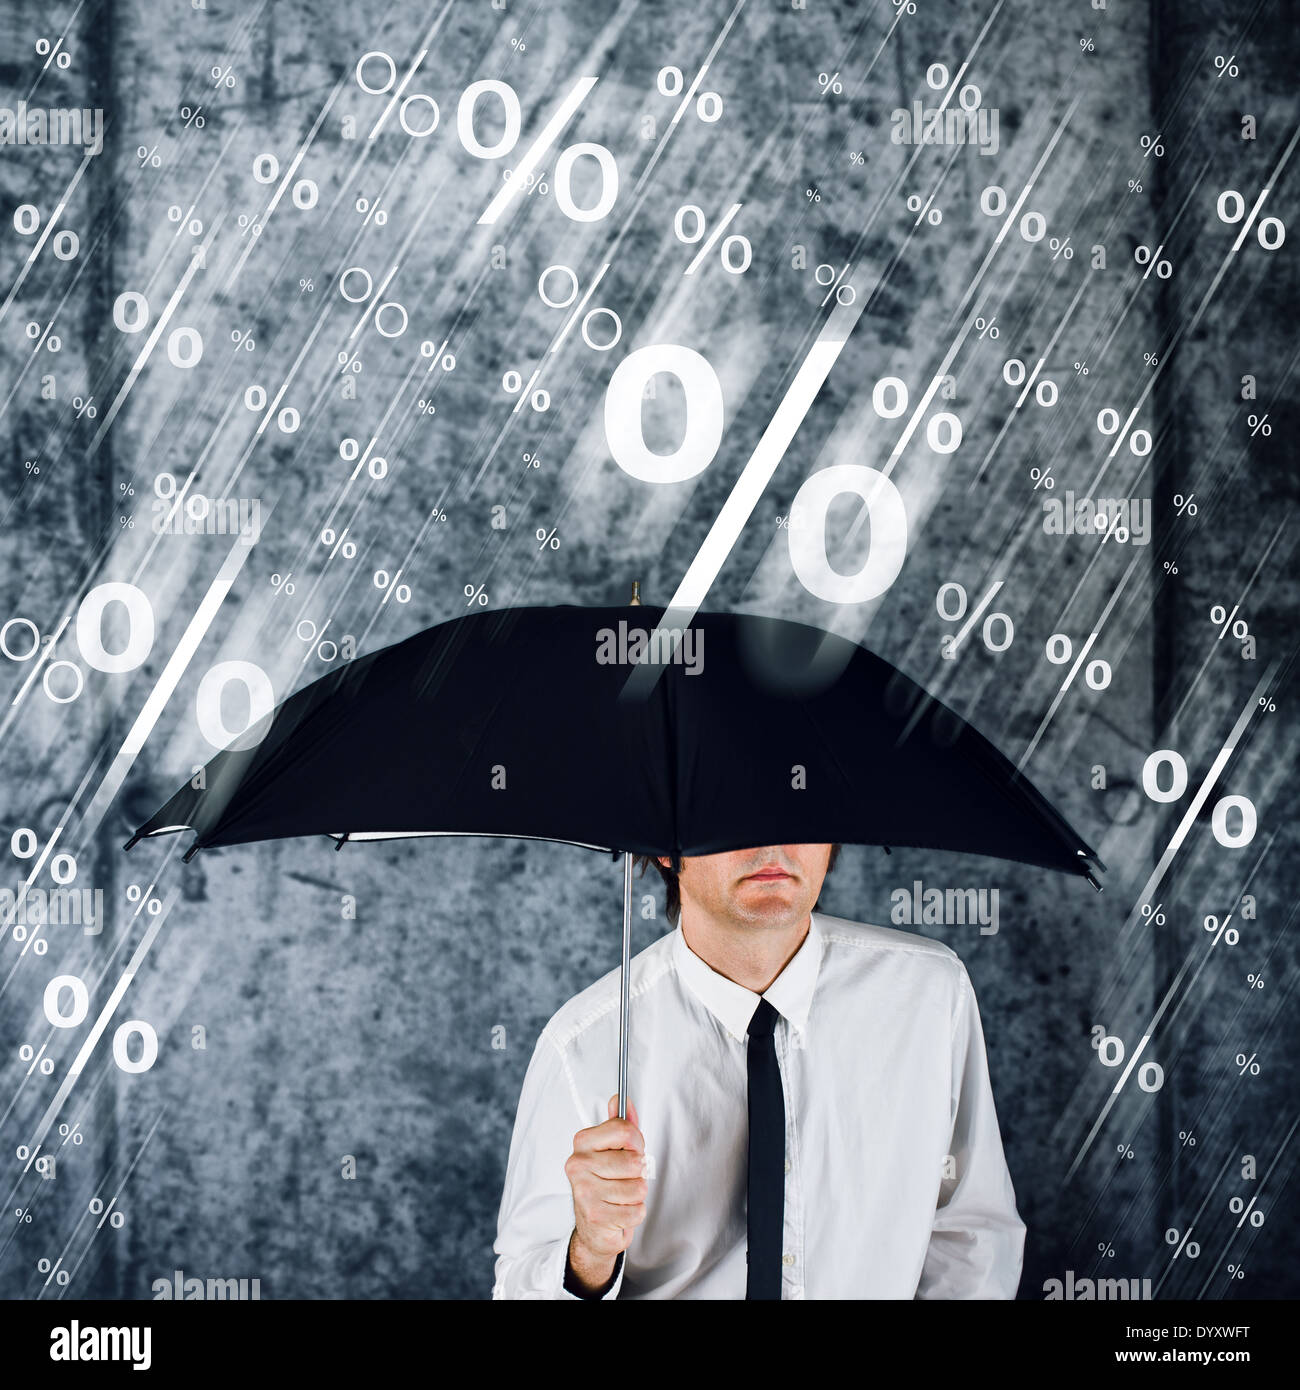 Businessman with umbrella protecting himself from rain of percentage symbols. Stock Photo